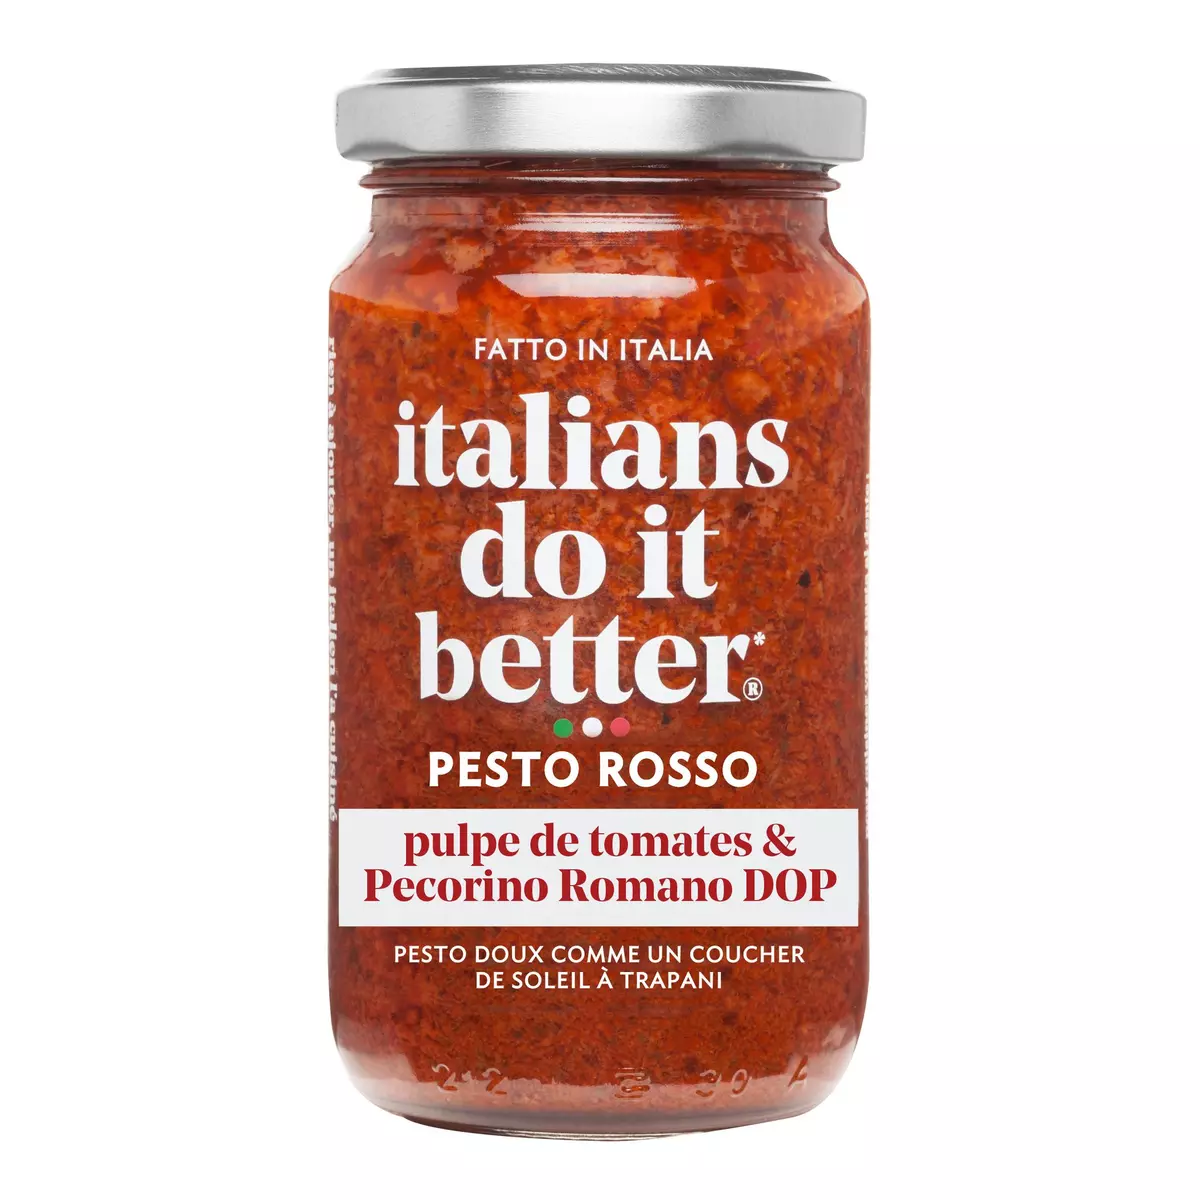 ITALIANS DO IT BETTER Sauce pesto rosso pulpe de tomates et pecorino romano DOP 180g